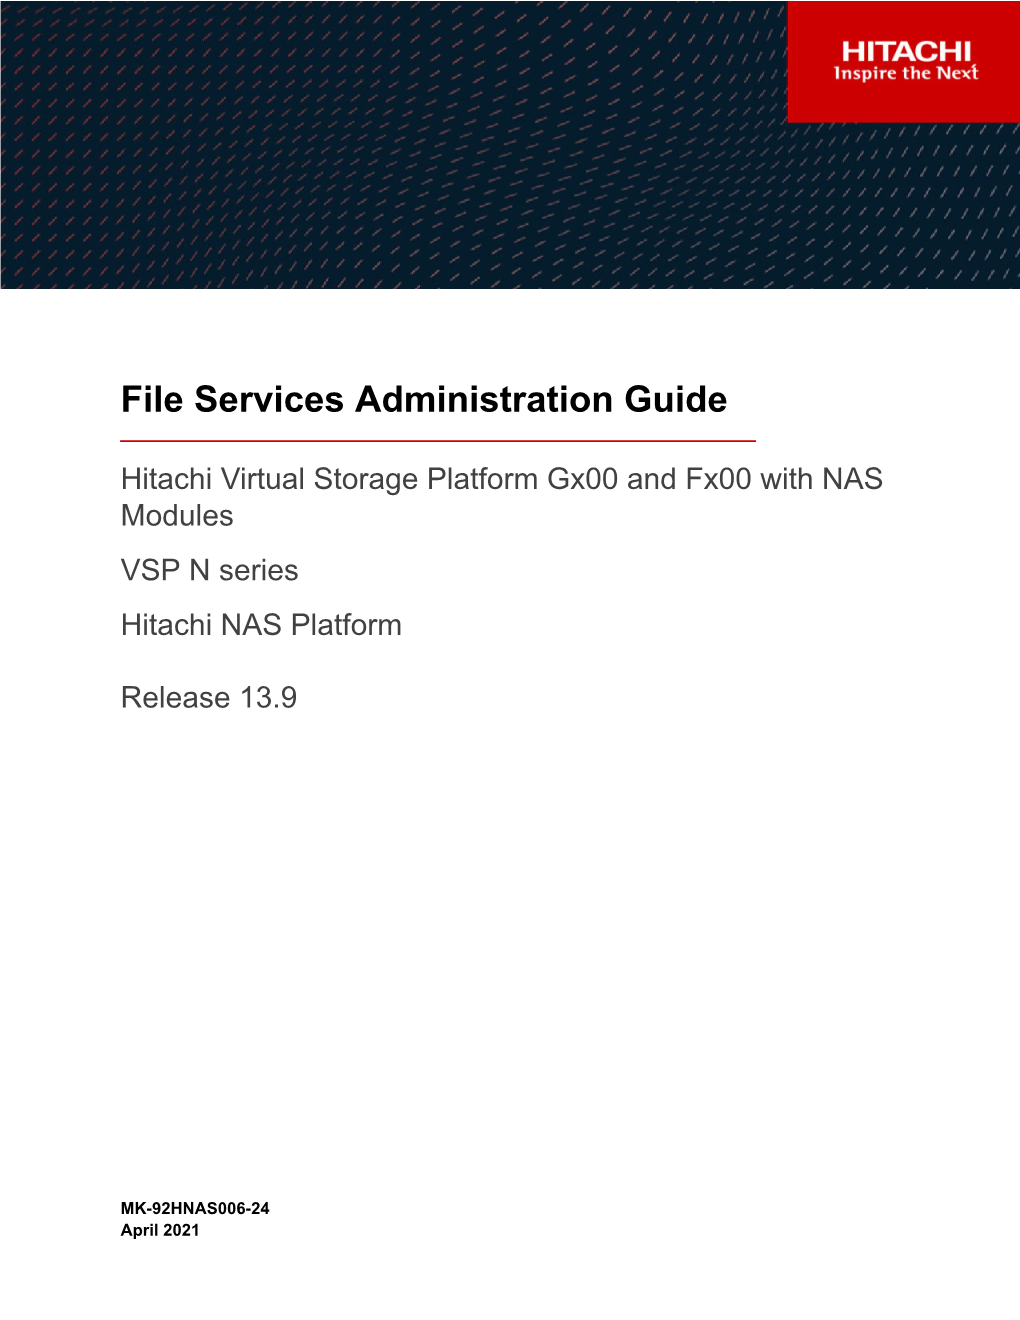 File Services Administration Guide for Hitachi NAS Platform 2 Contents